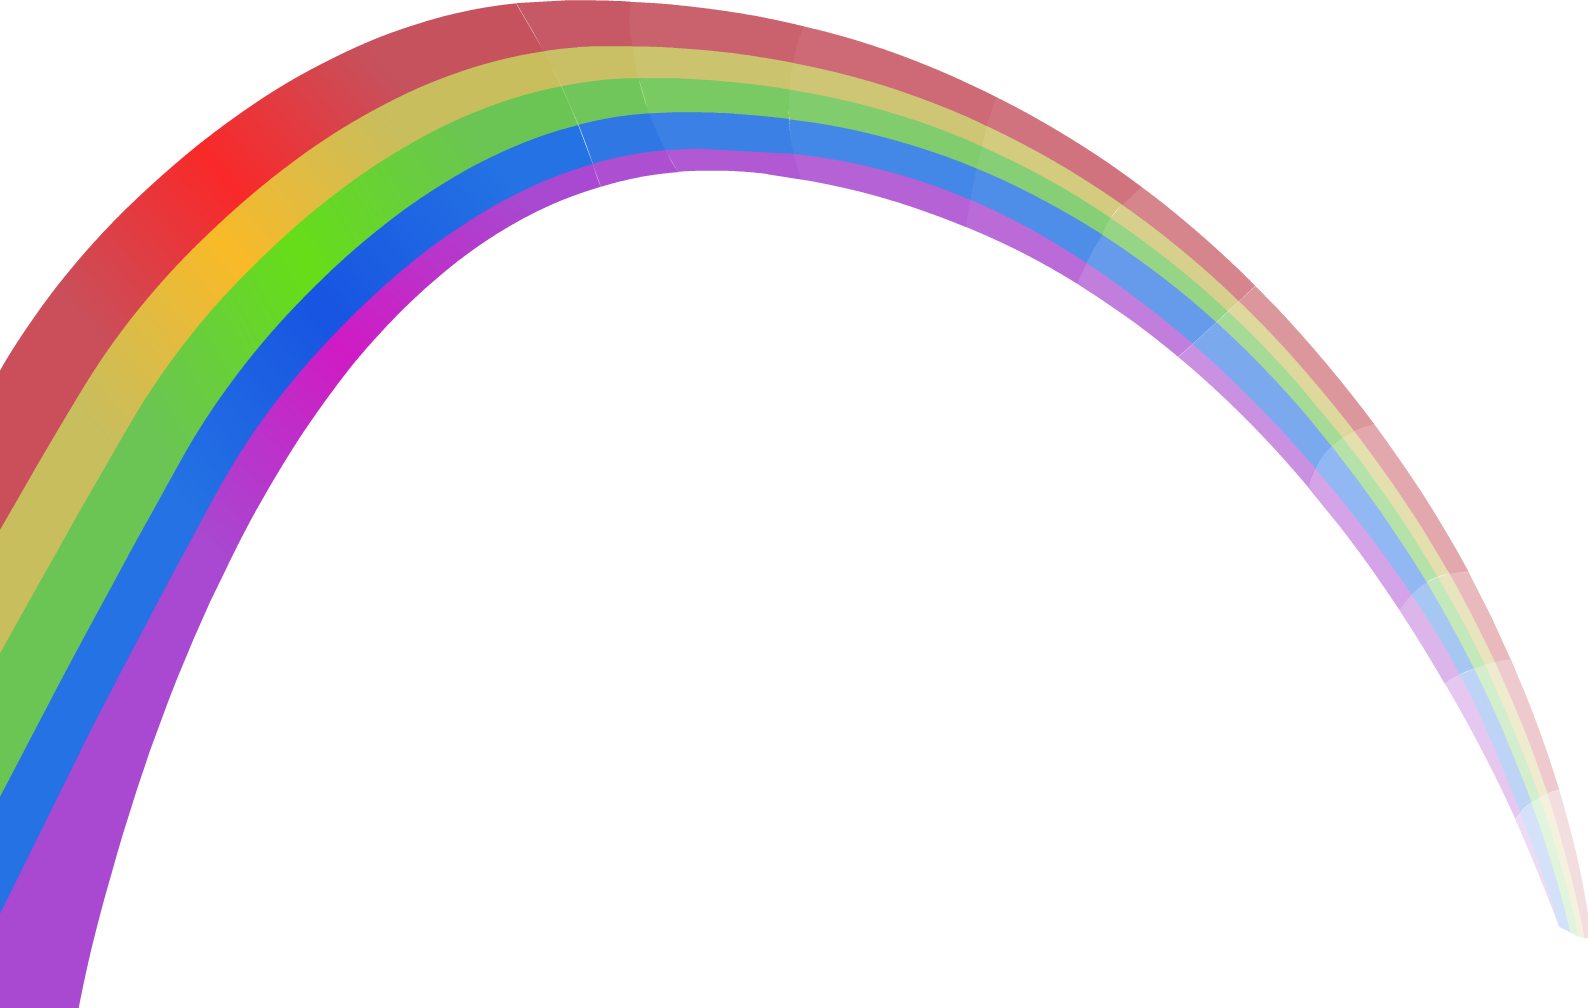 Rainbow Png Image Transparent Background Transparent Rainbow Clipart